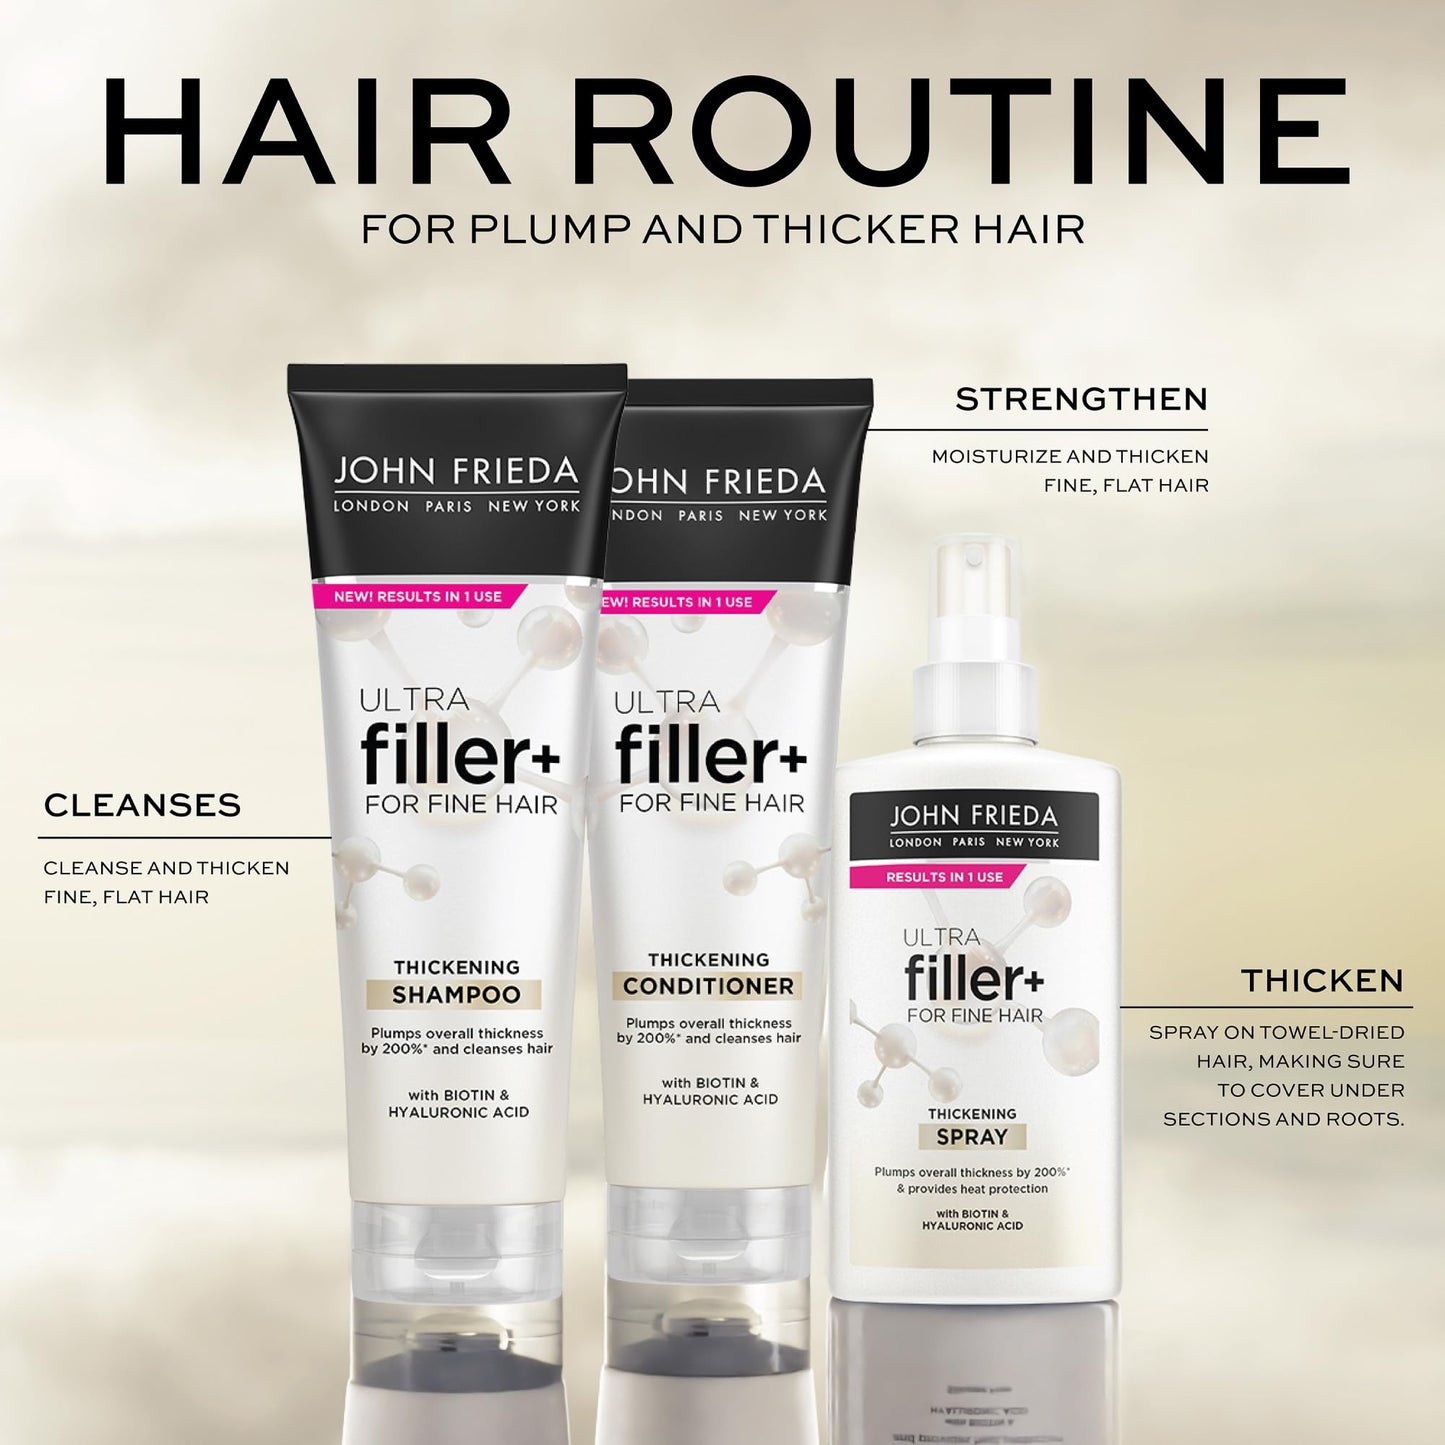 John Frieda ULTRAfiller+ Thickening Shampoo for Fine Hair, Volumizing Shampoo, Biotin and Hyaluronic Acid Hair Thickening Shampoo, 8.3 Oz